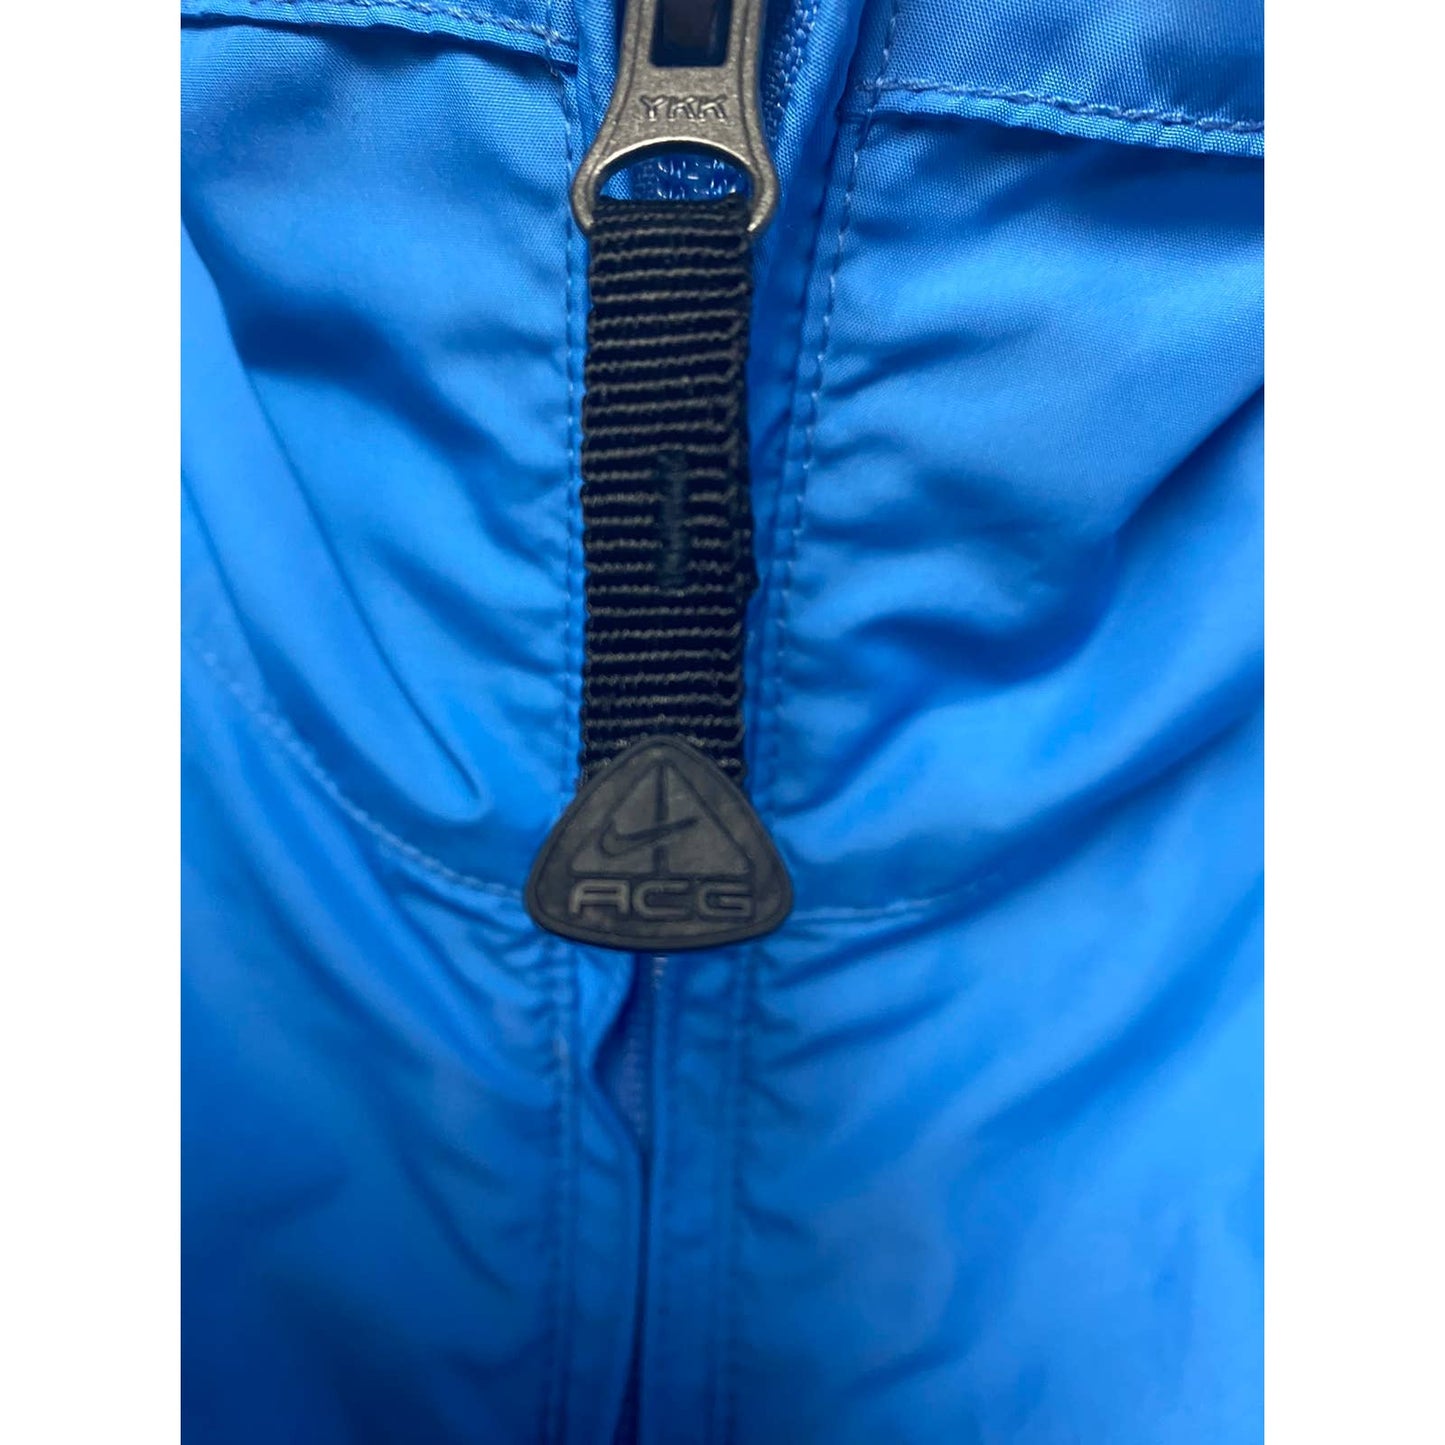 Nike ACG rain jacket vintage blue 2000s windbreaker